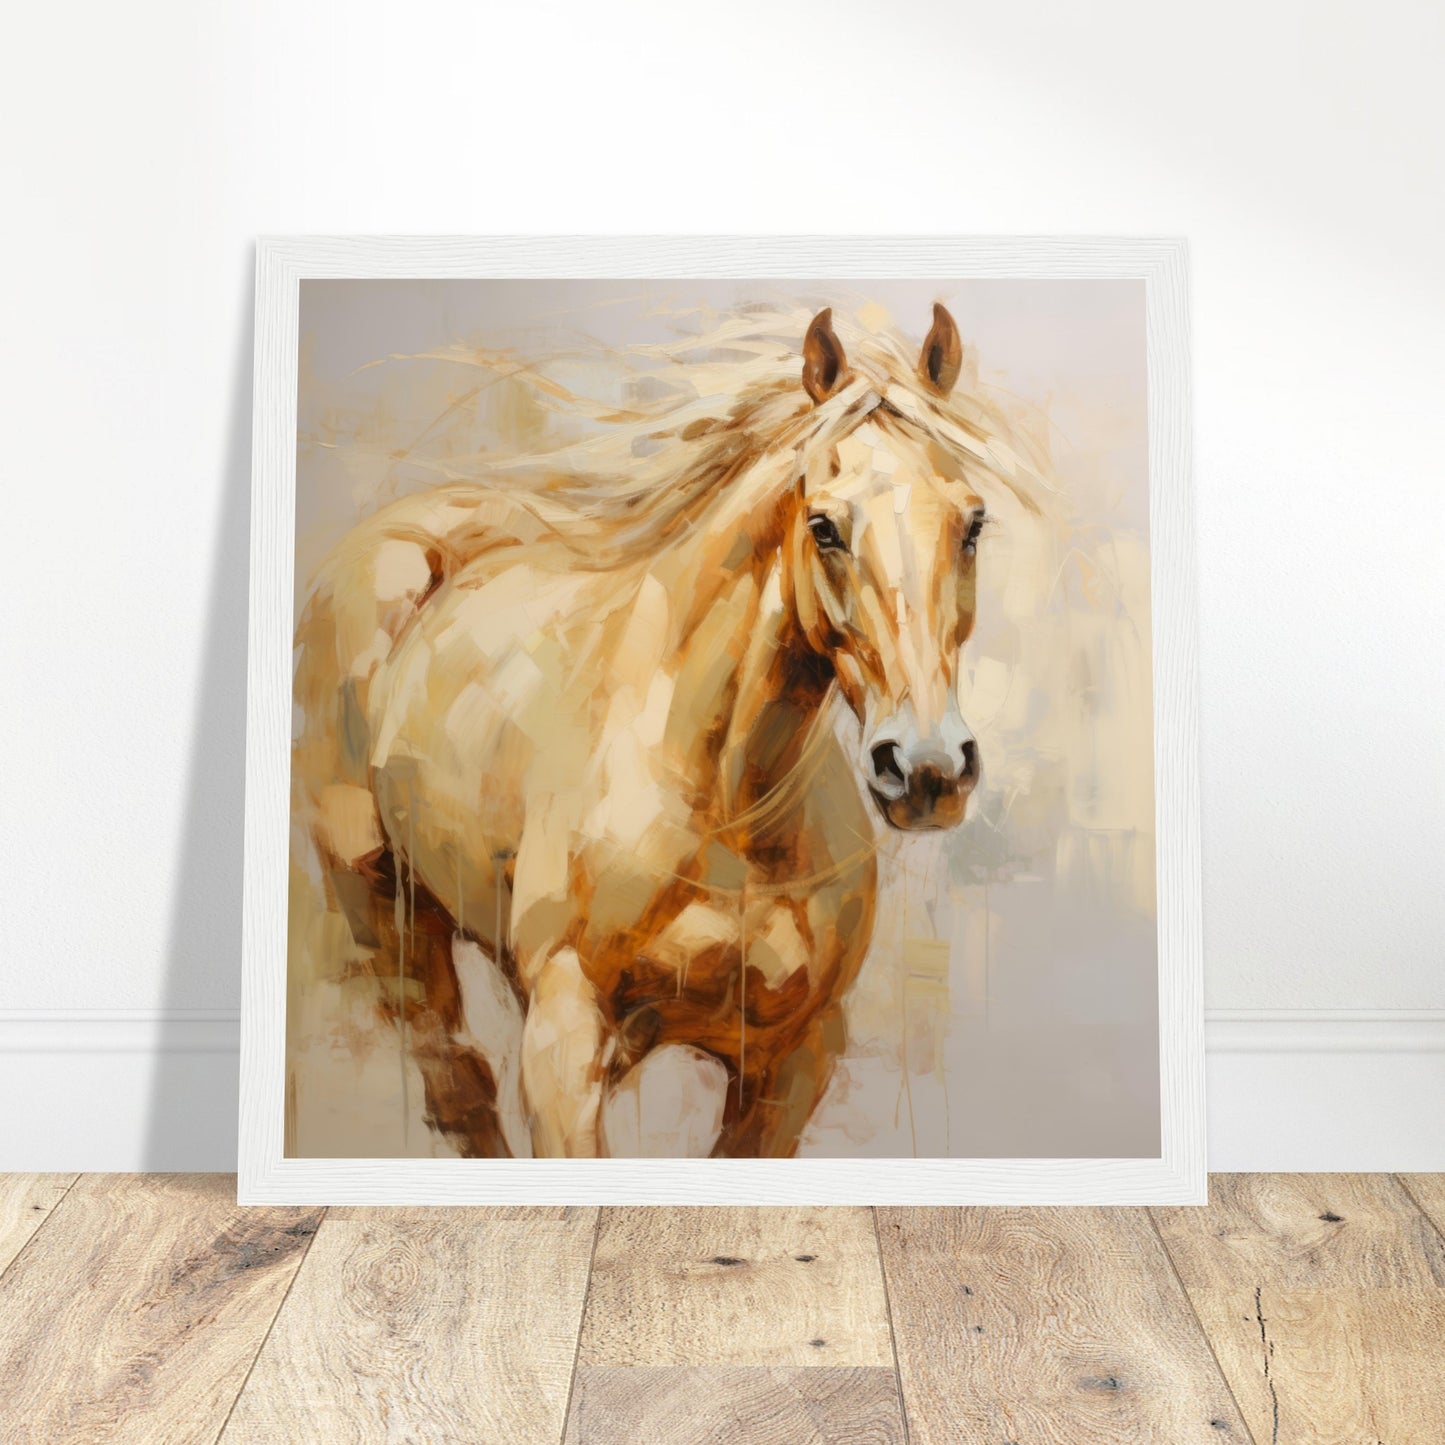 Equine Elegance #12 - Print Room Ltd Dark wood frame 30x30 cm / 12x12"